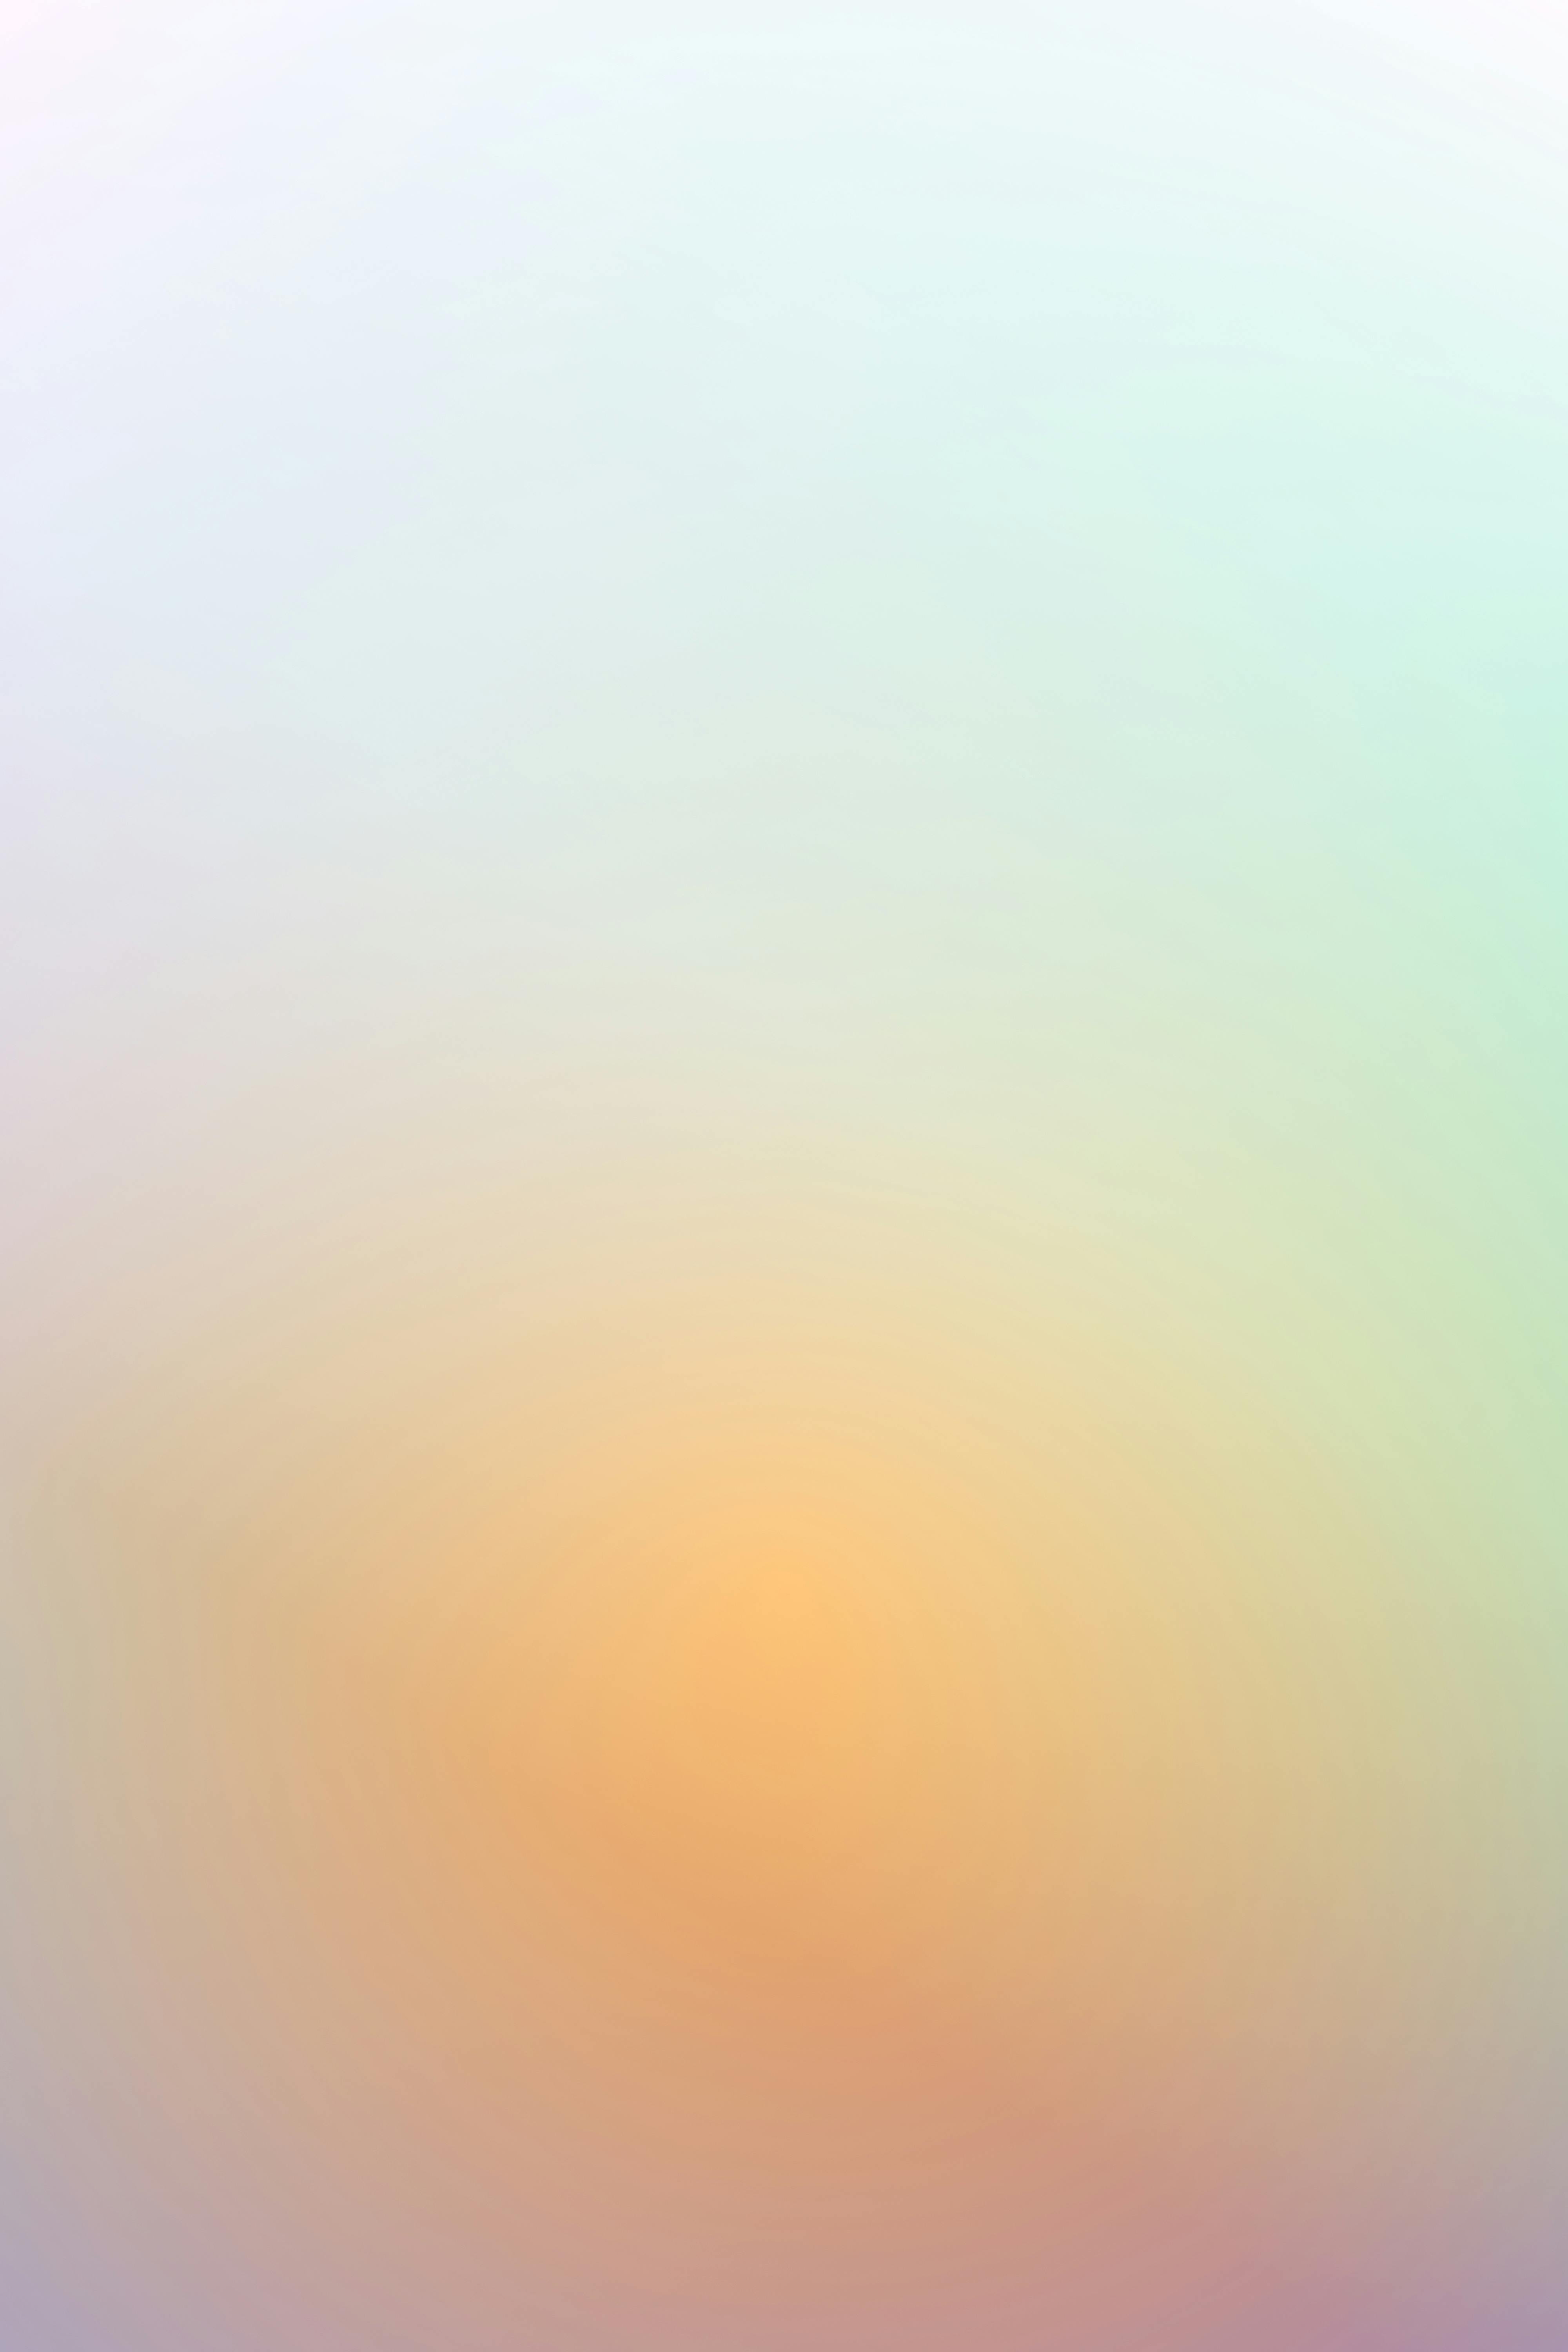 Fresh Orange Circles White Green Background Wallpaper Image For Free  Download  Pngtree